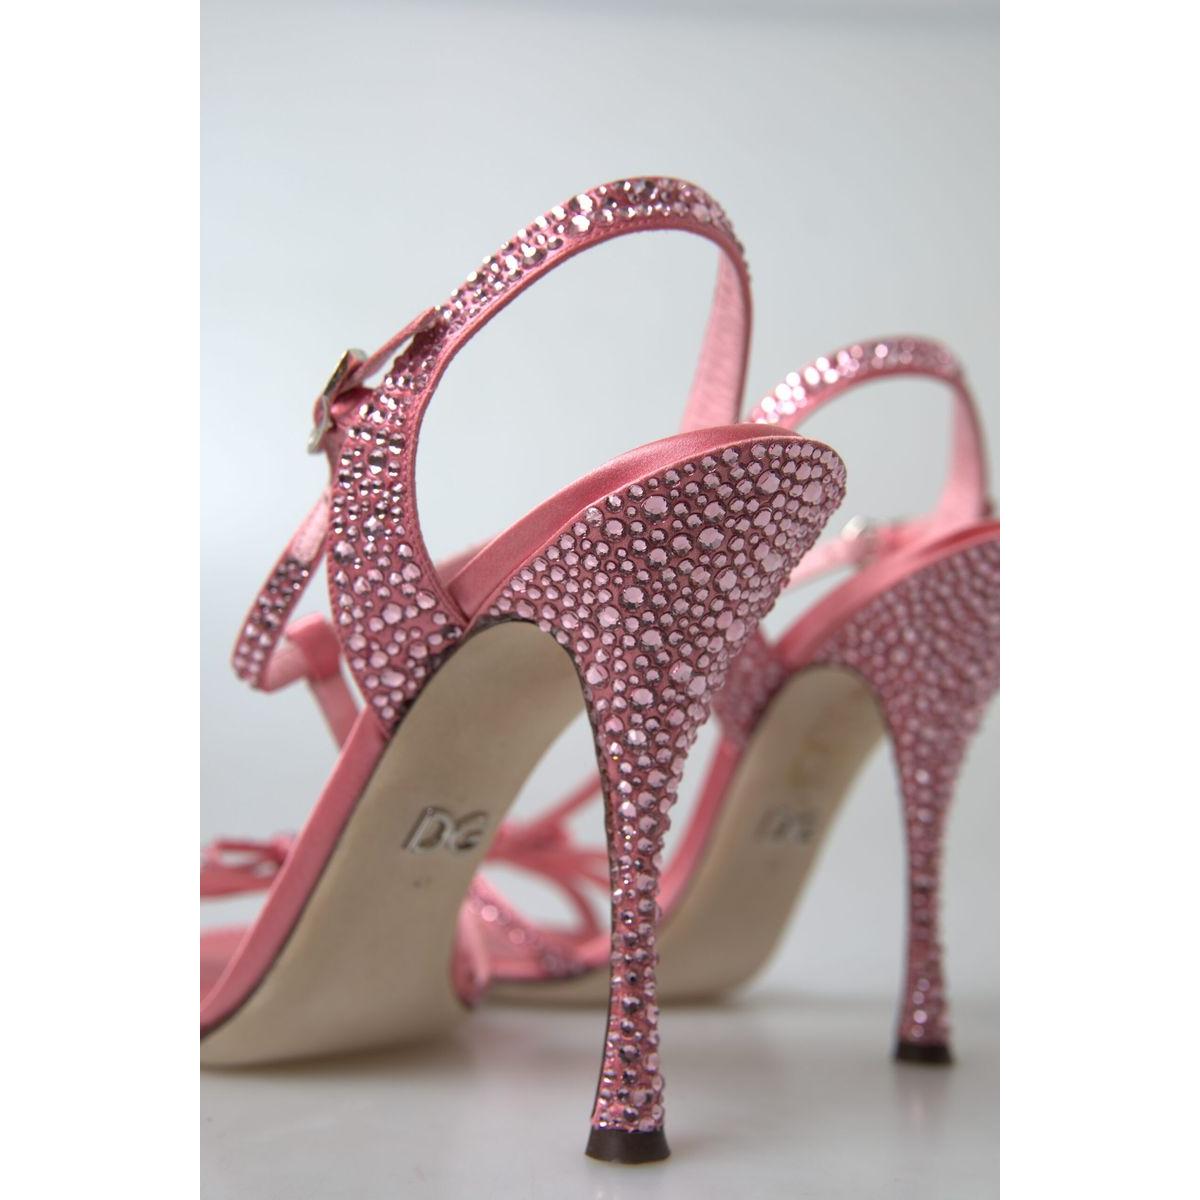 Dolce & Gabbana Elegant Pink Ankle Strap Sandals pink-crystal-ankle-strap-shoes-sandals 465A8848-scaled-56fff559-989_cf2e1588-287f-4f5b-a14f-9dffddf19bca.jpg